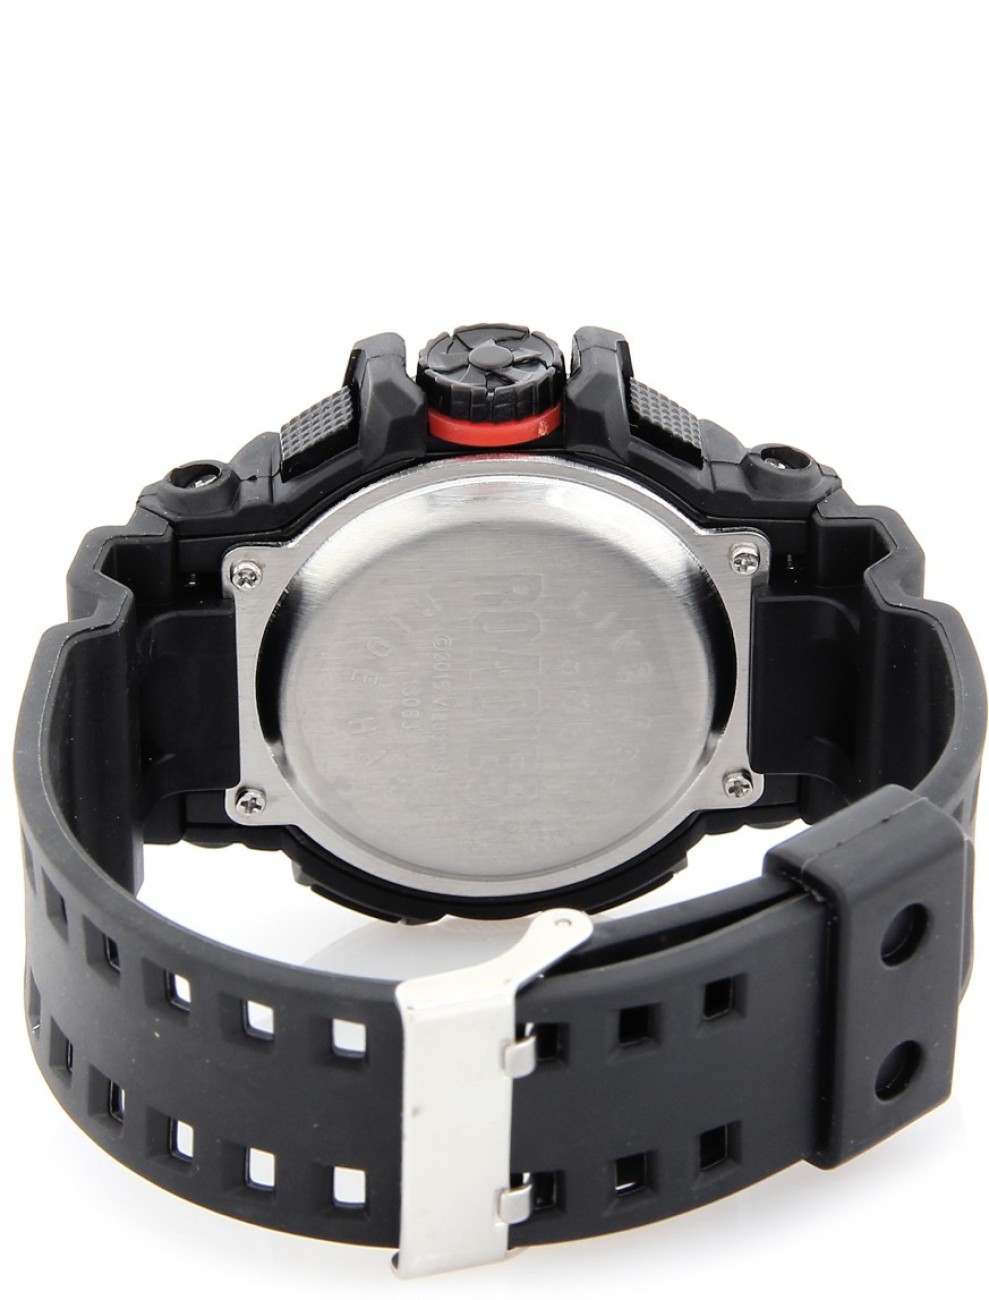 casio men's analog & digital watch model no ad84